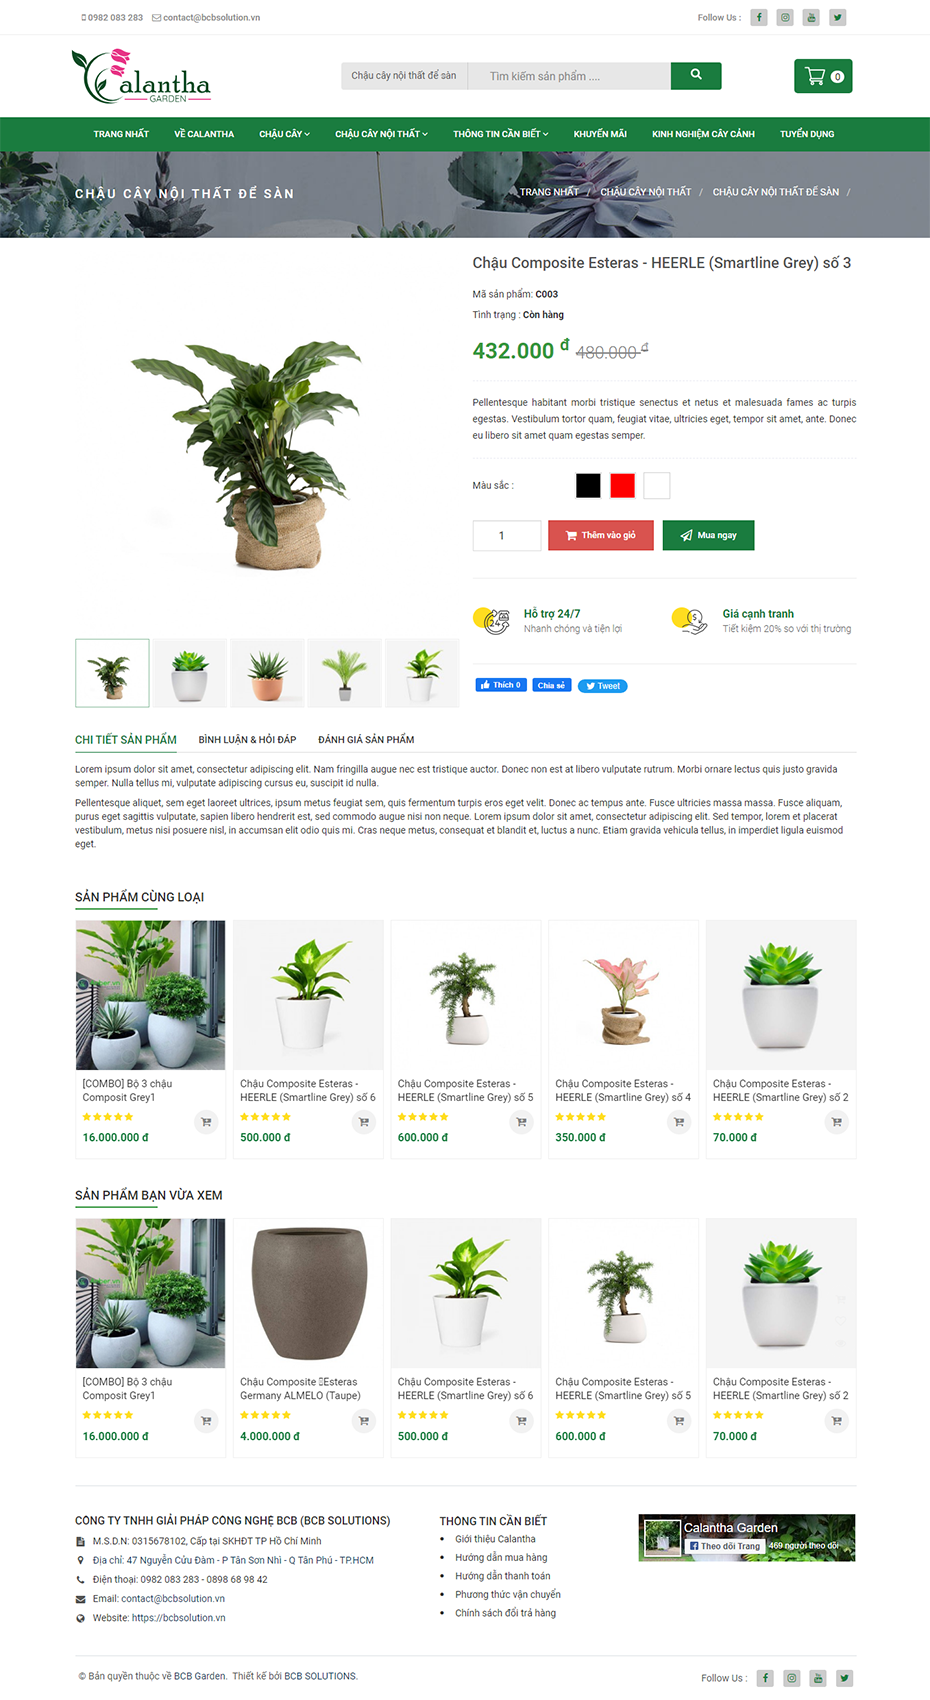 Giao diện website bán hàng - BCB Garden 3